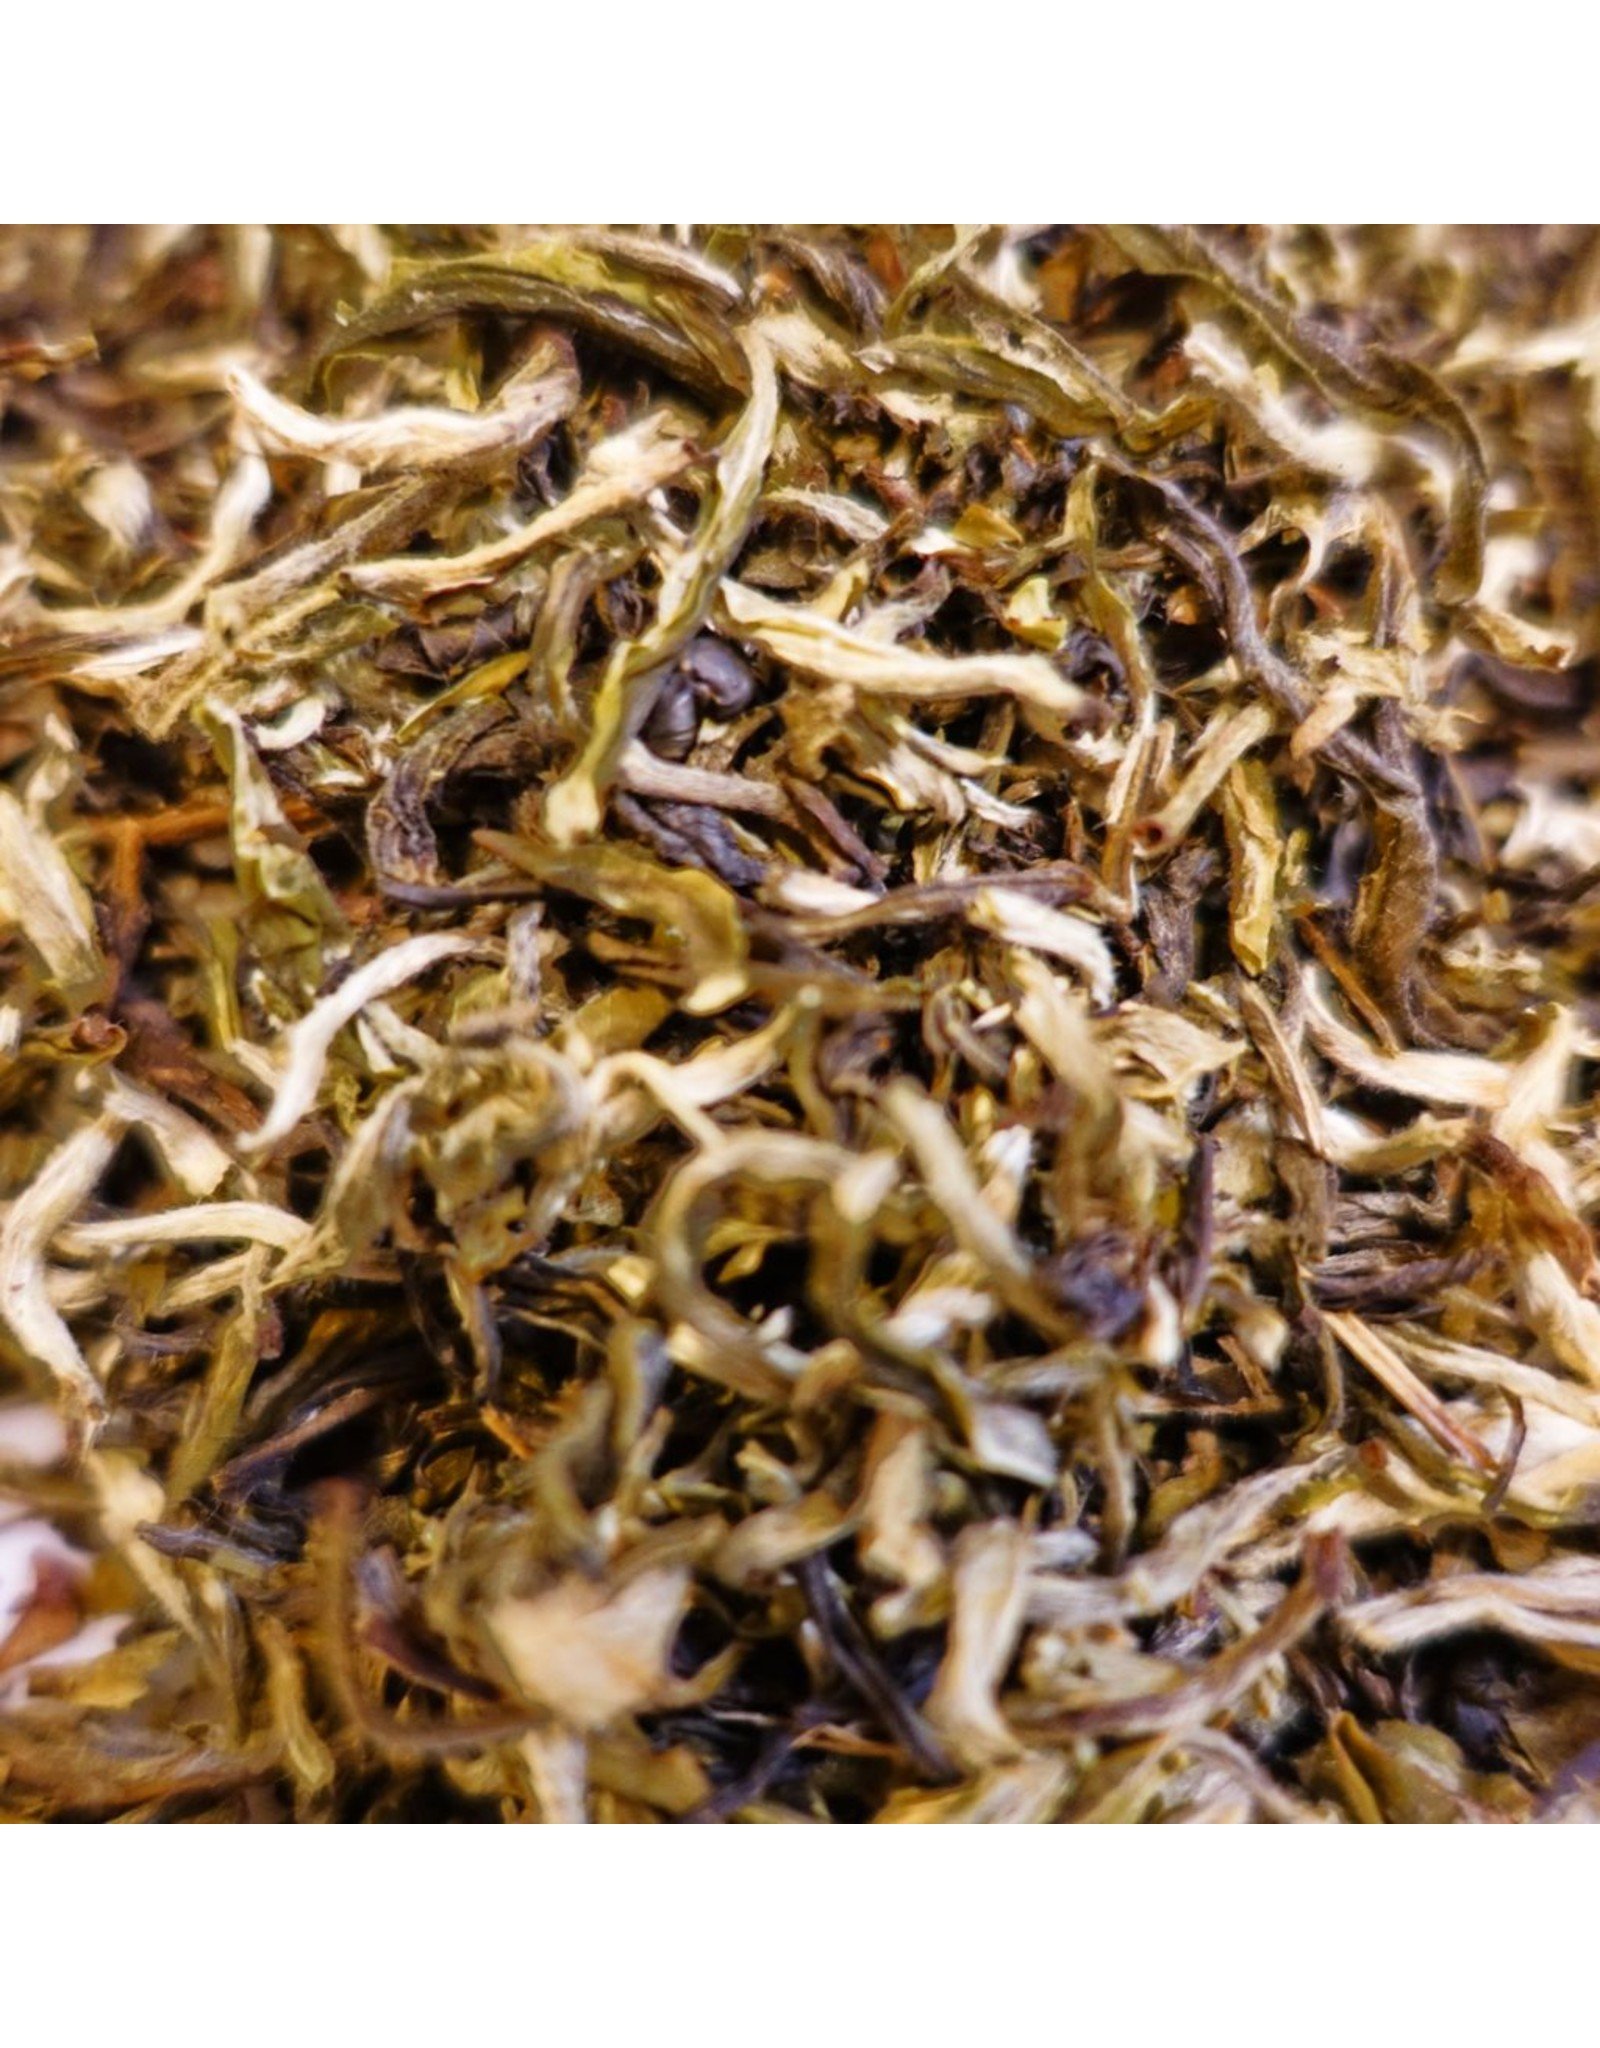 Tea from China Devil’s Bridge Green Jasmine Blend